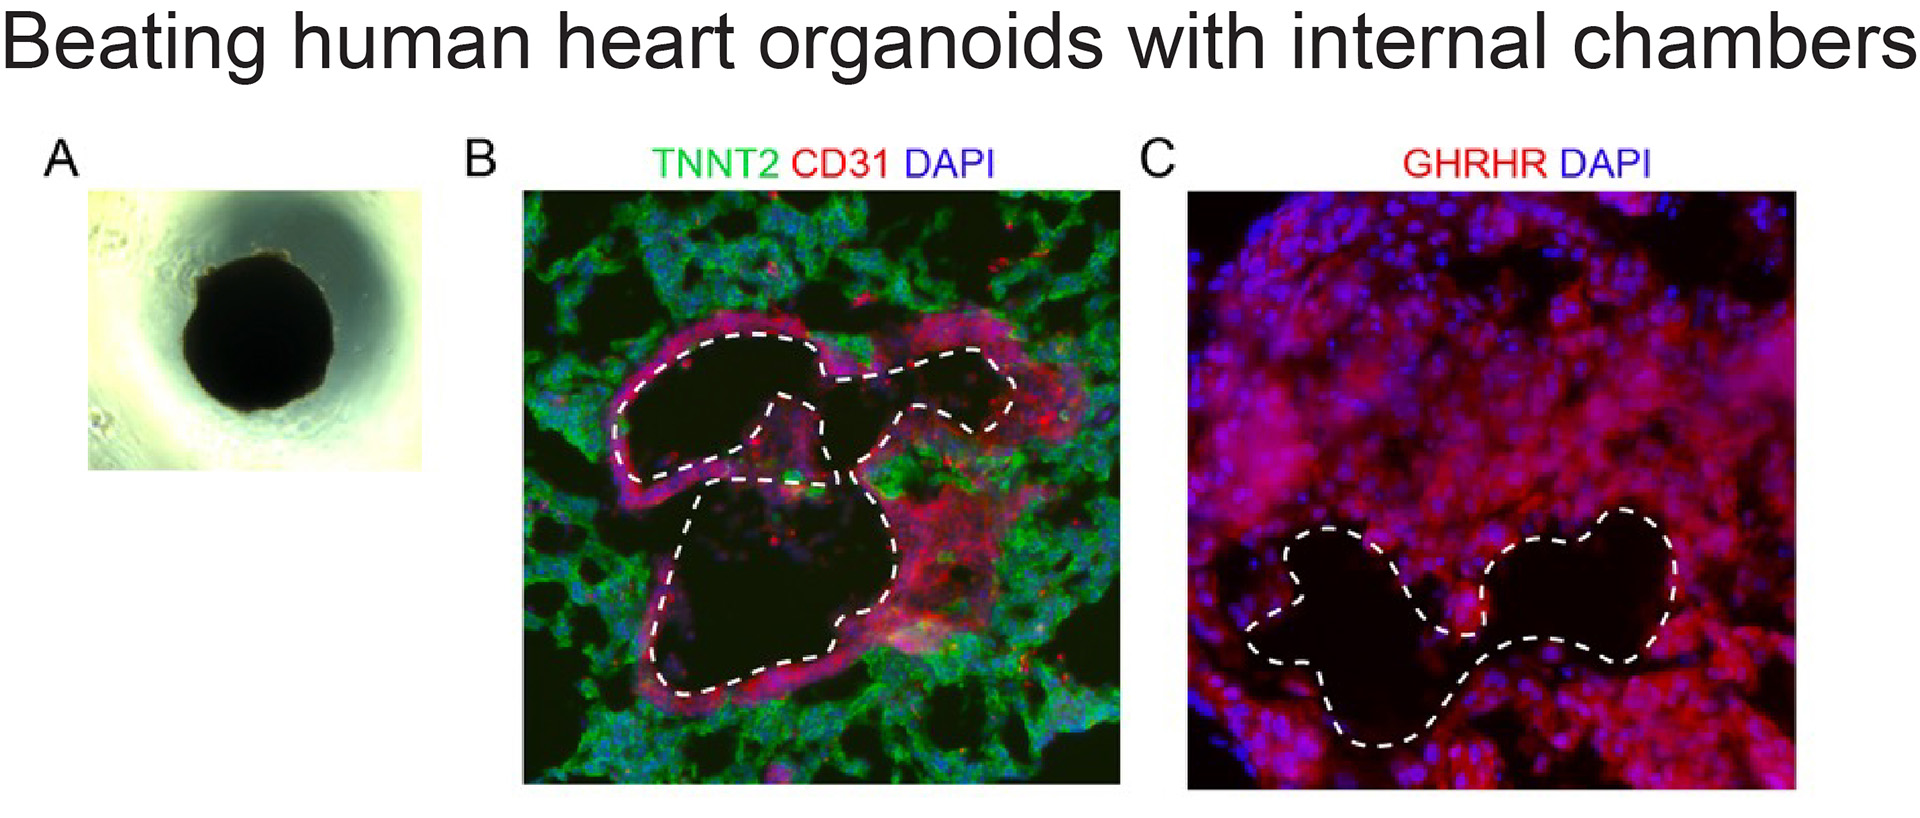 Beating human heart organoids with internal chambers